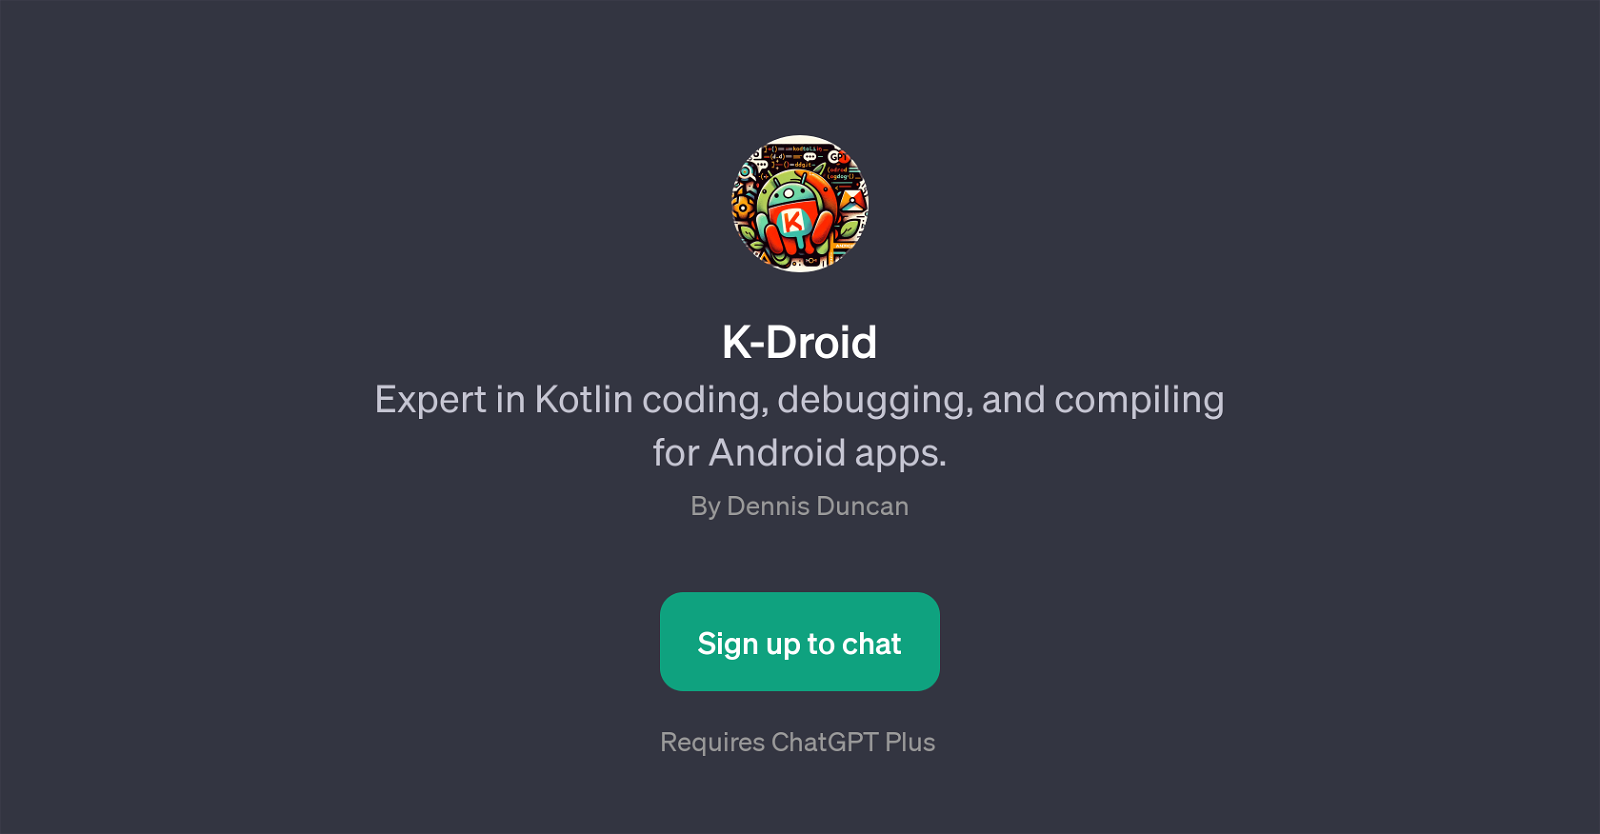 K-Droid website